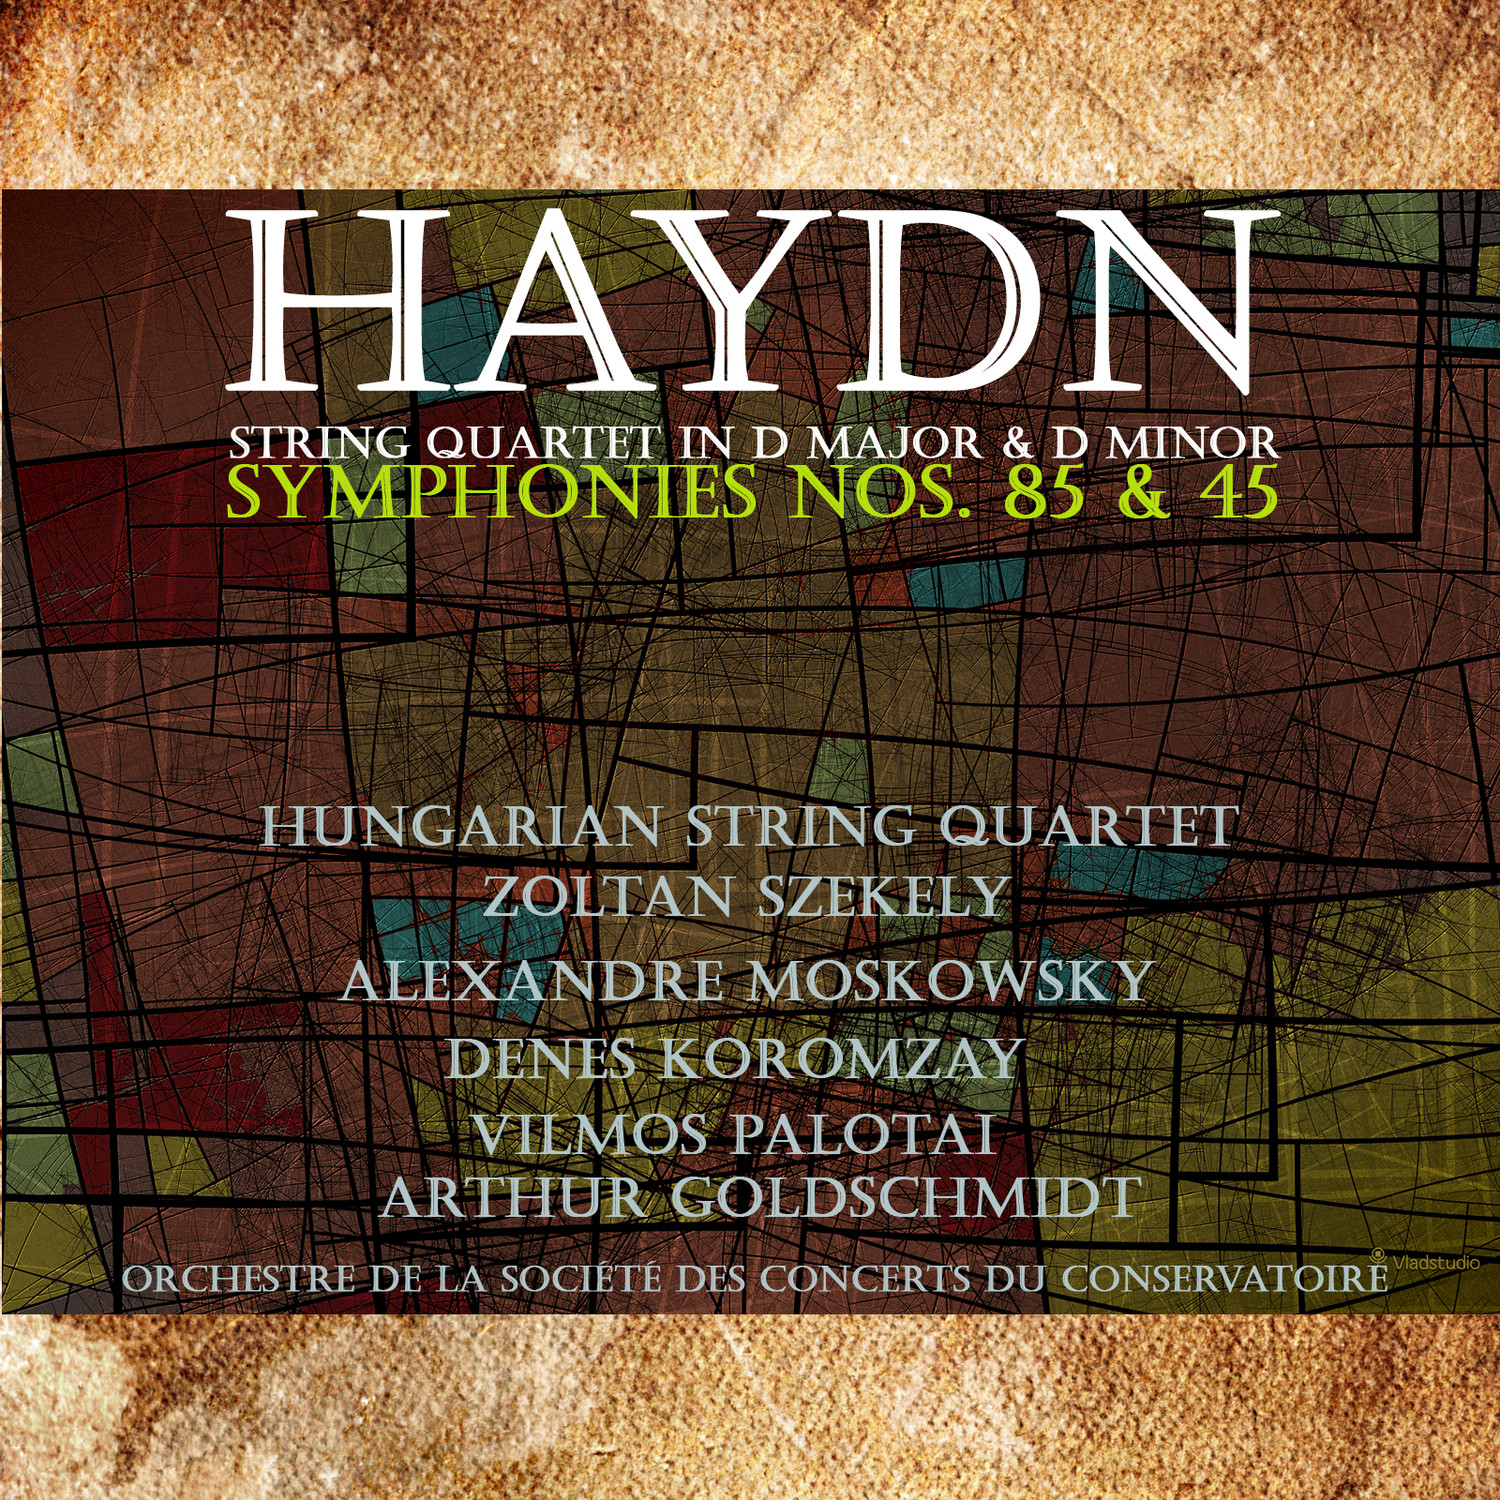 Haydn: String Quartet in D Major & D Minor,  Symphonies Nos. 85 & 45